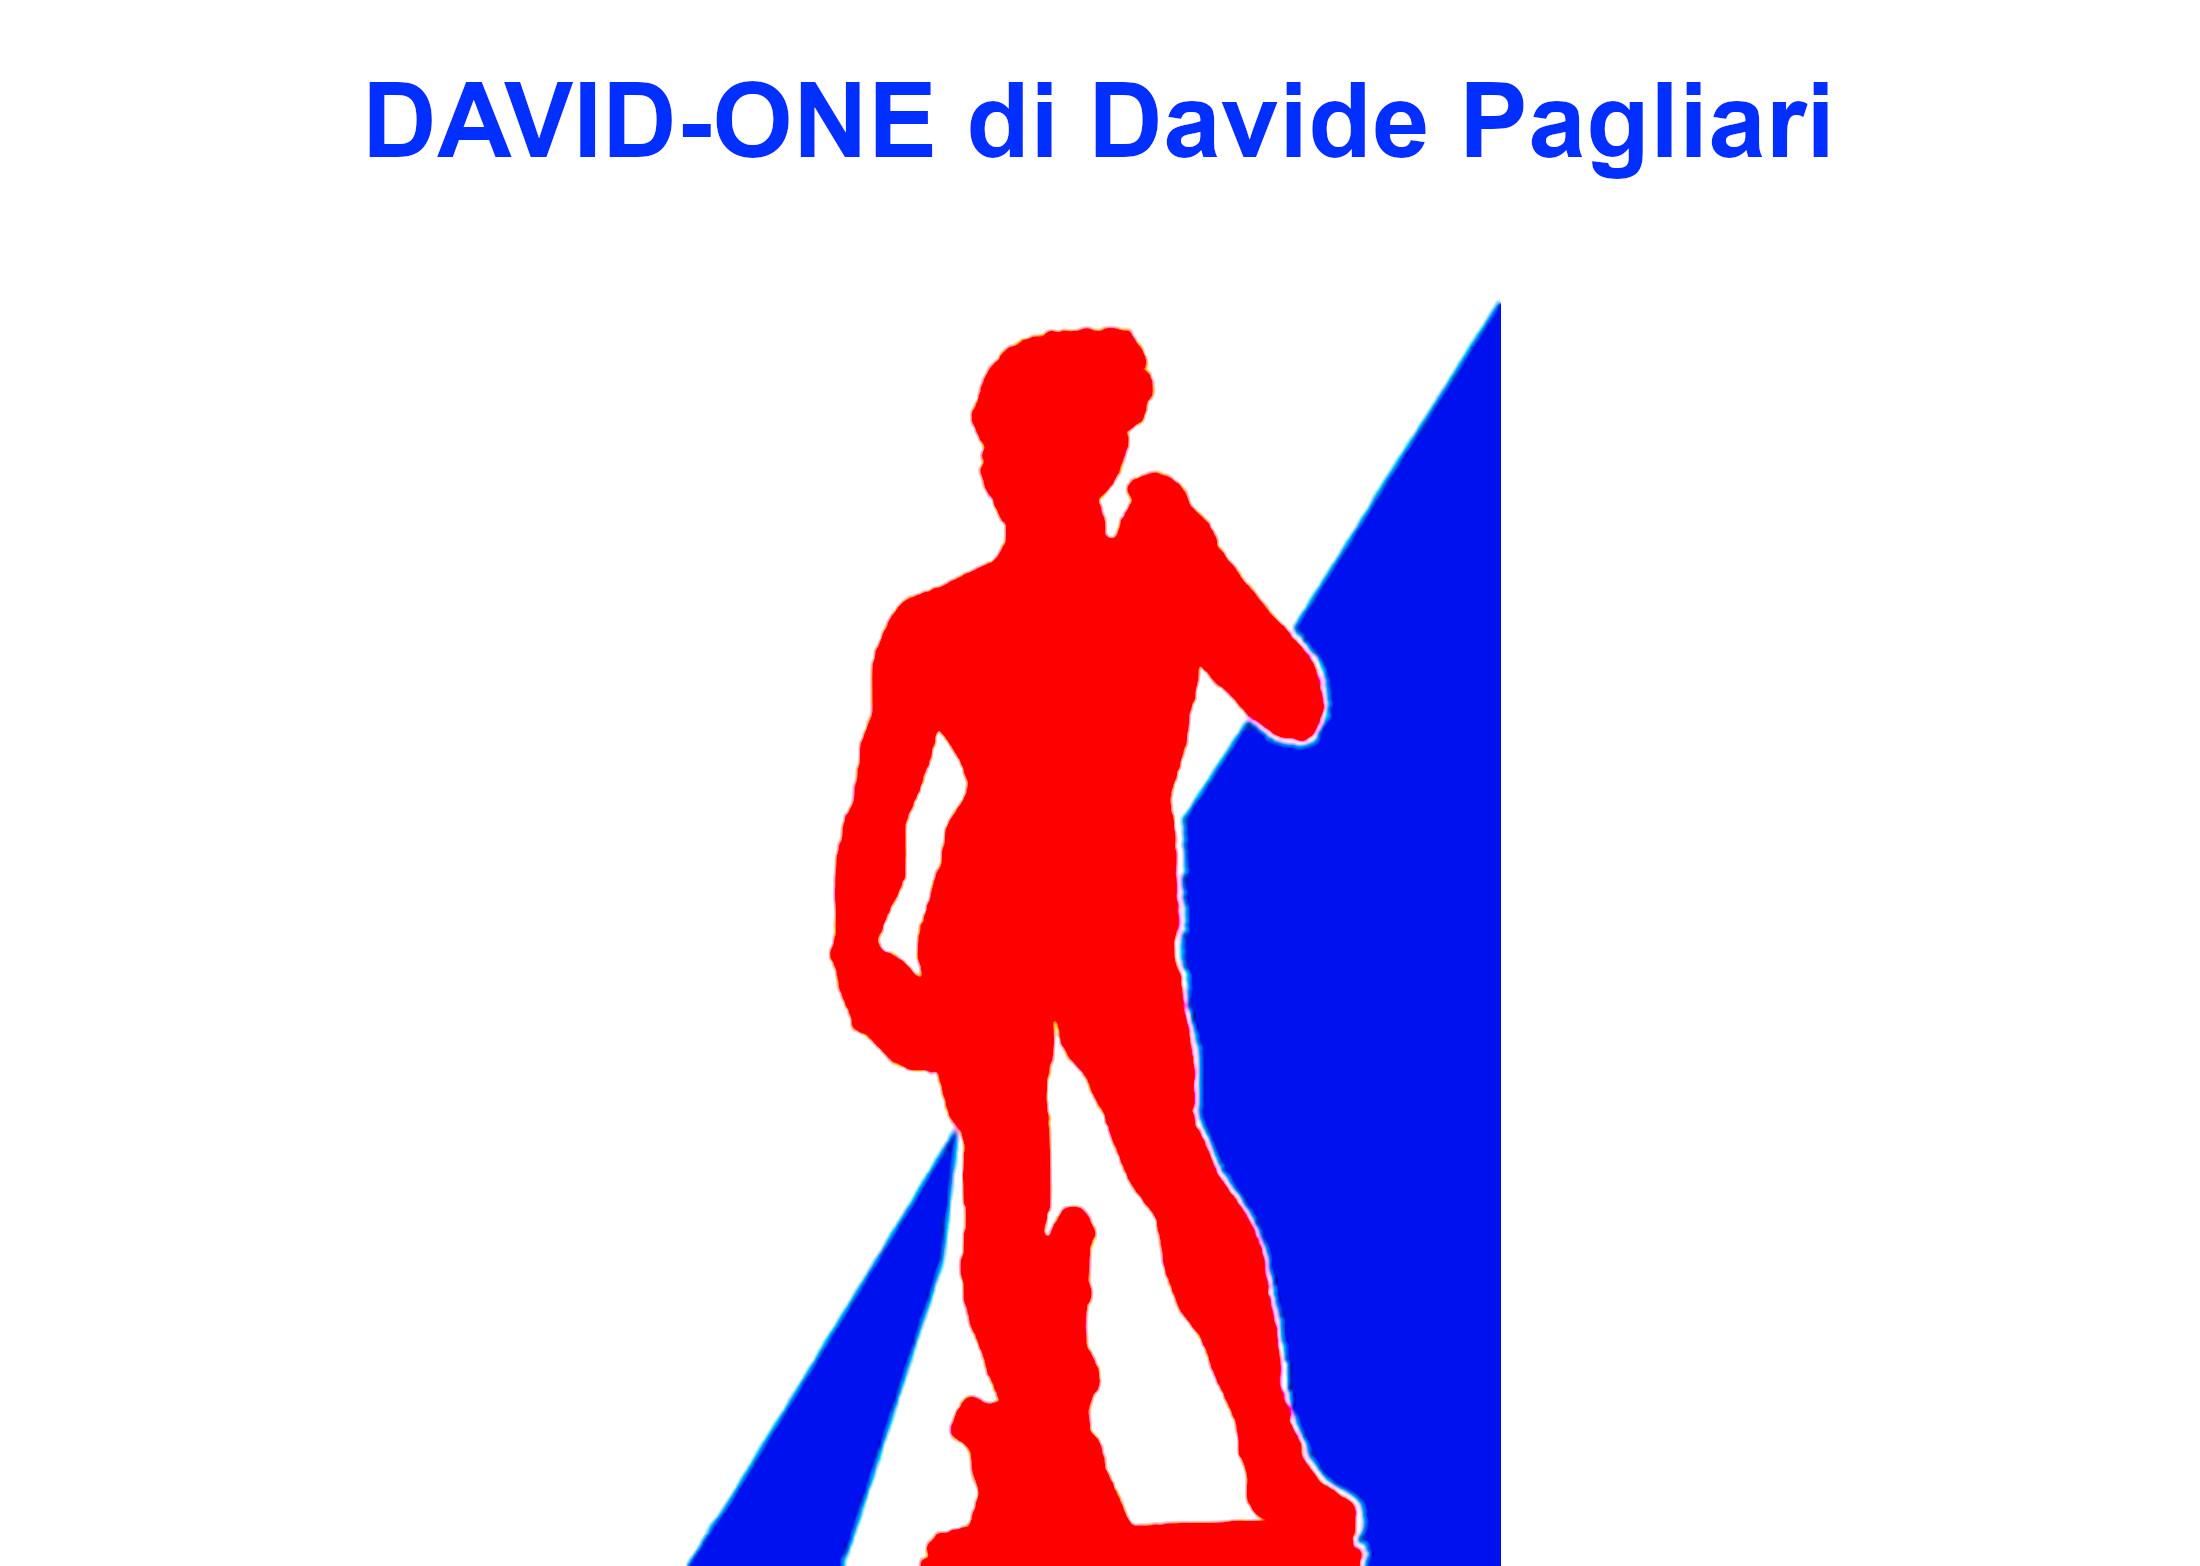 DAVID-ONE DI DAVIDE PAGLIARI